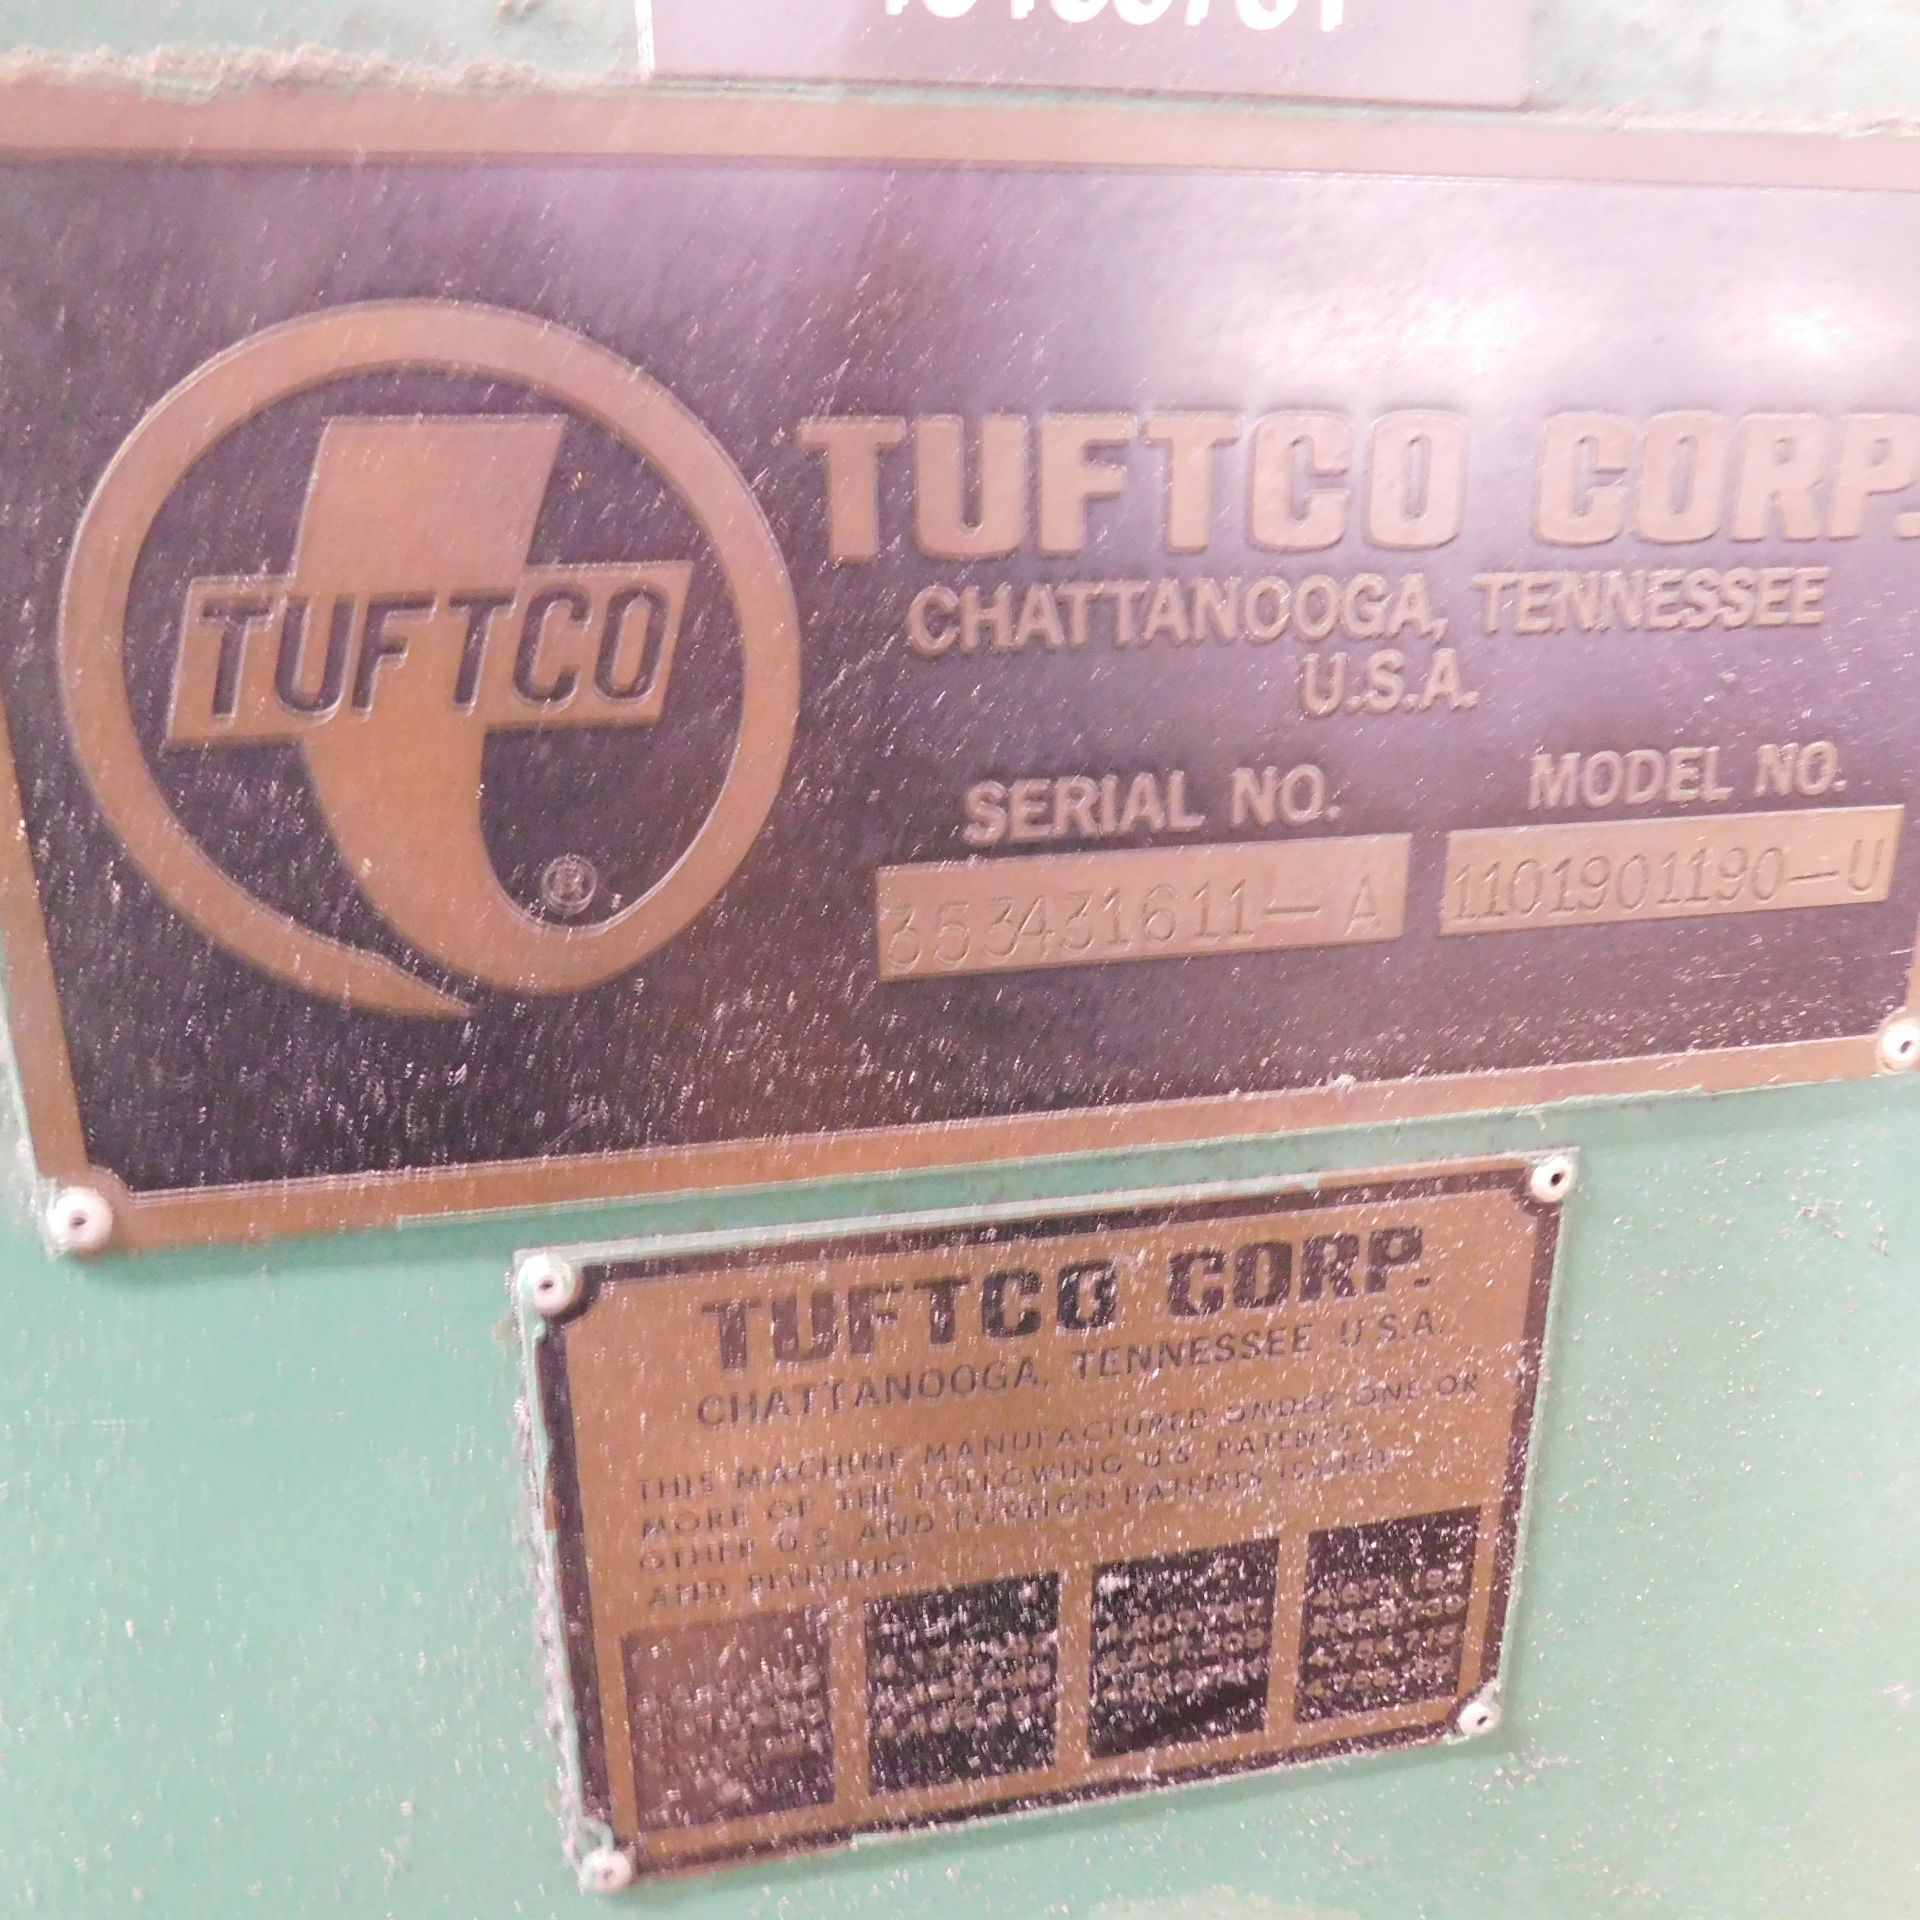 Tuftco Model 1101901190-U Carpet Tufting Machine, s/n 353431611-A, 5 Meter, 1/8 Gauge, 7 Zone, - Image 7 of 14